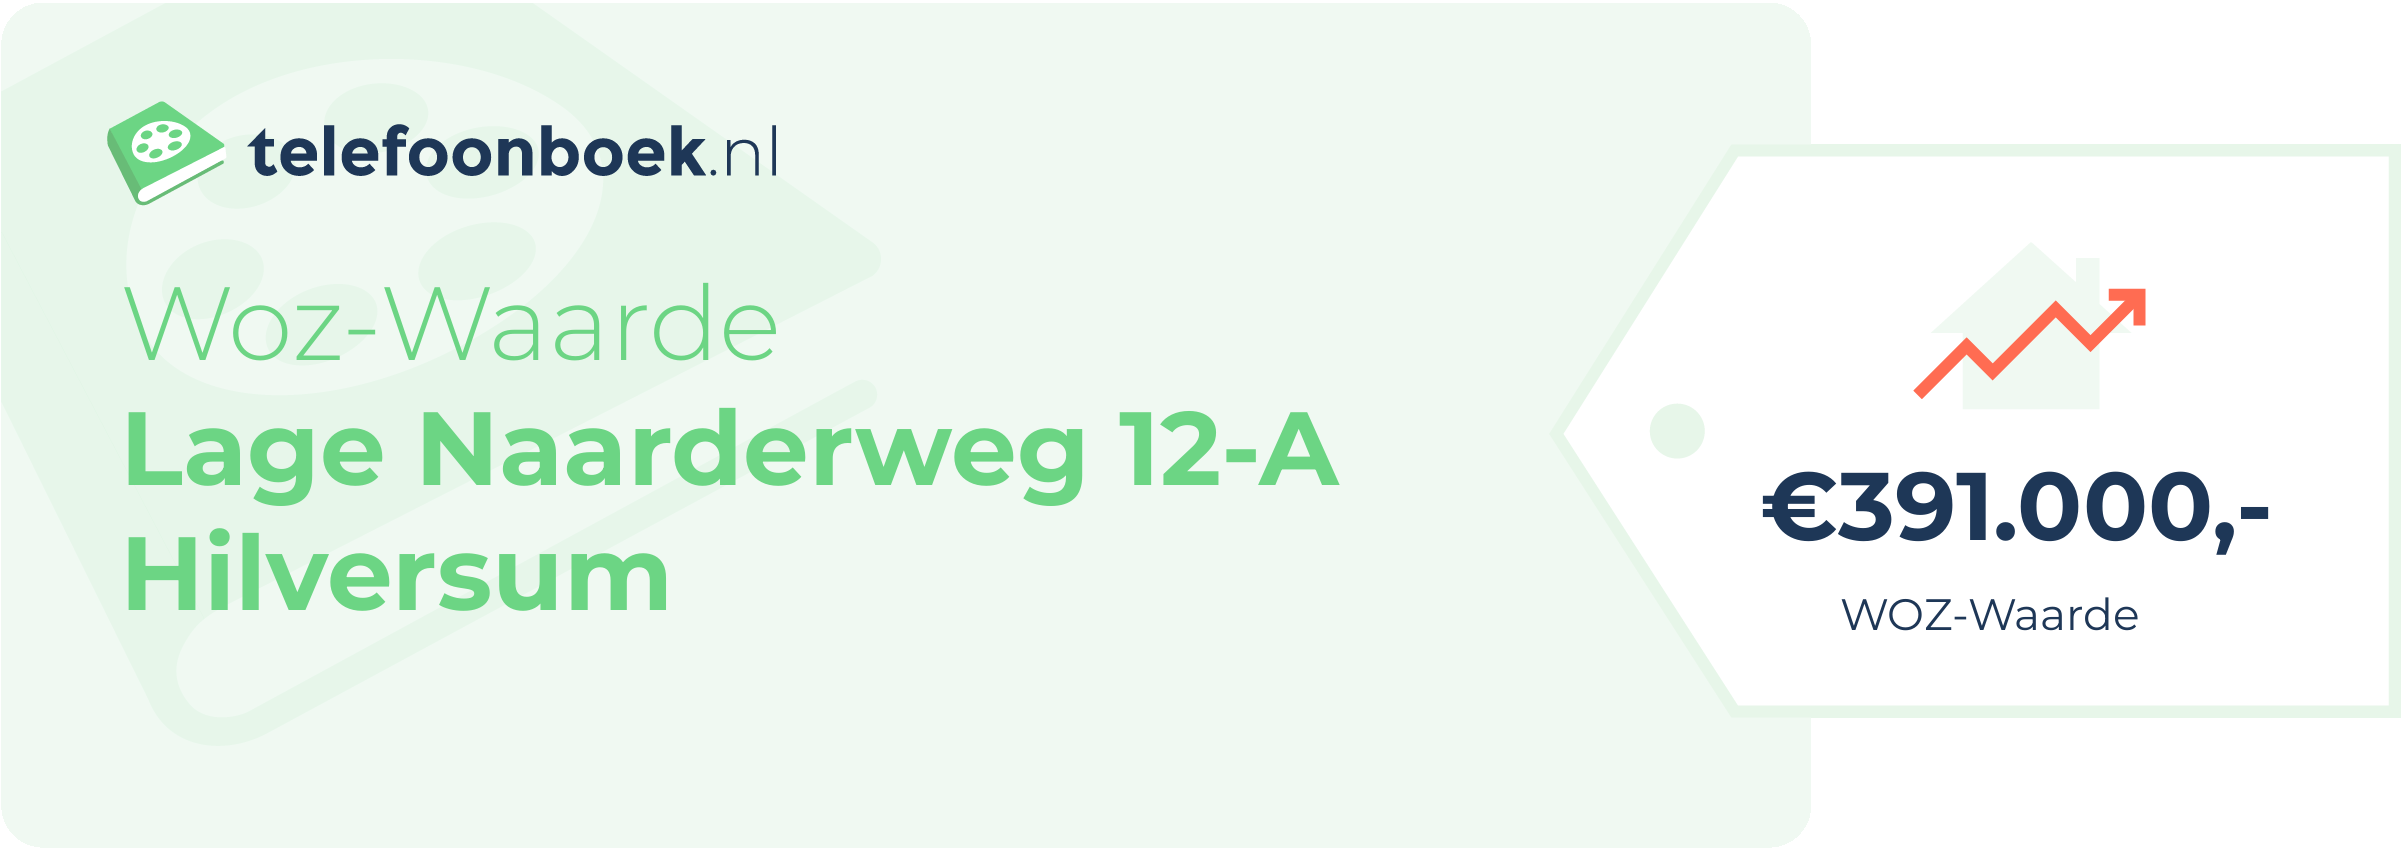 WOZ-waarde Lage Naarderweg 12-A Hilversum